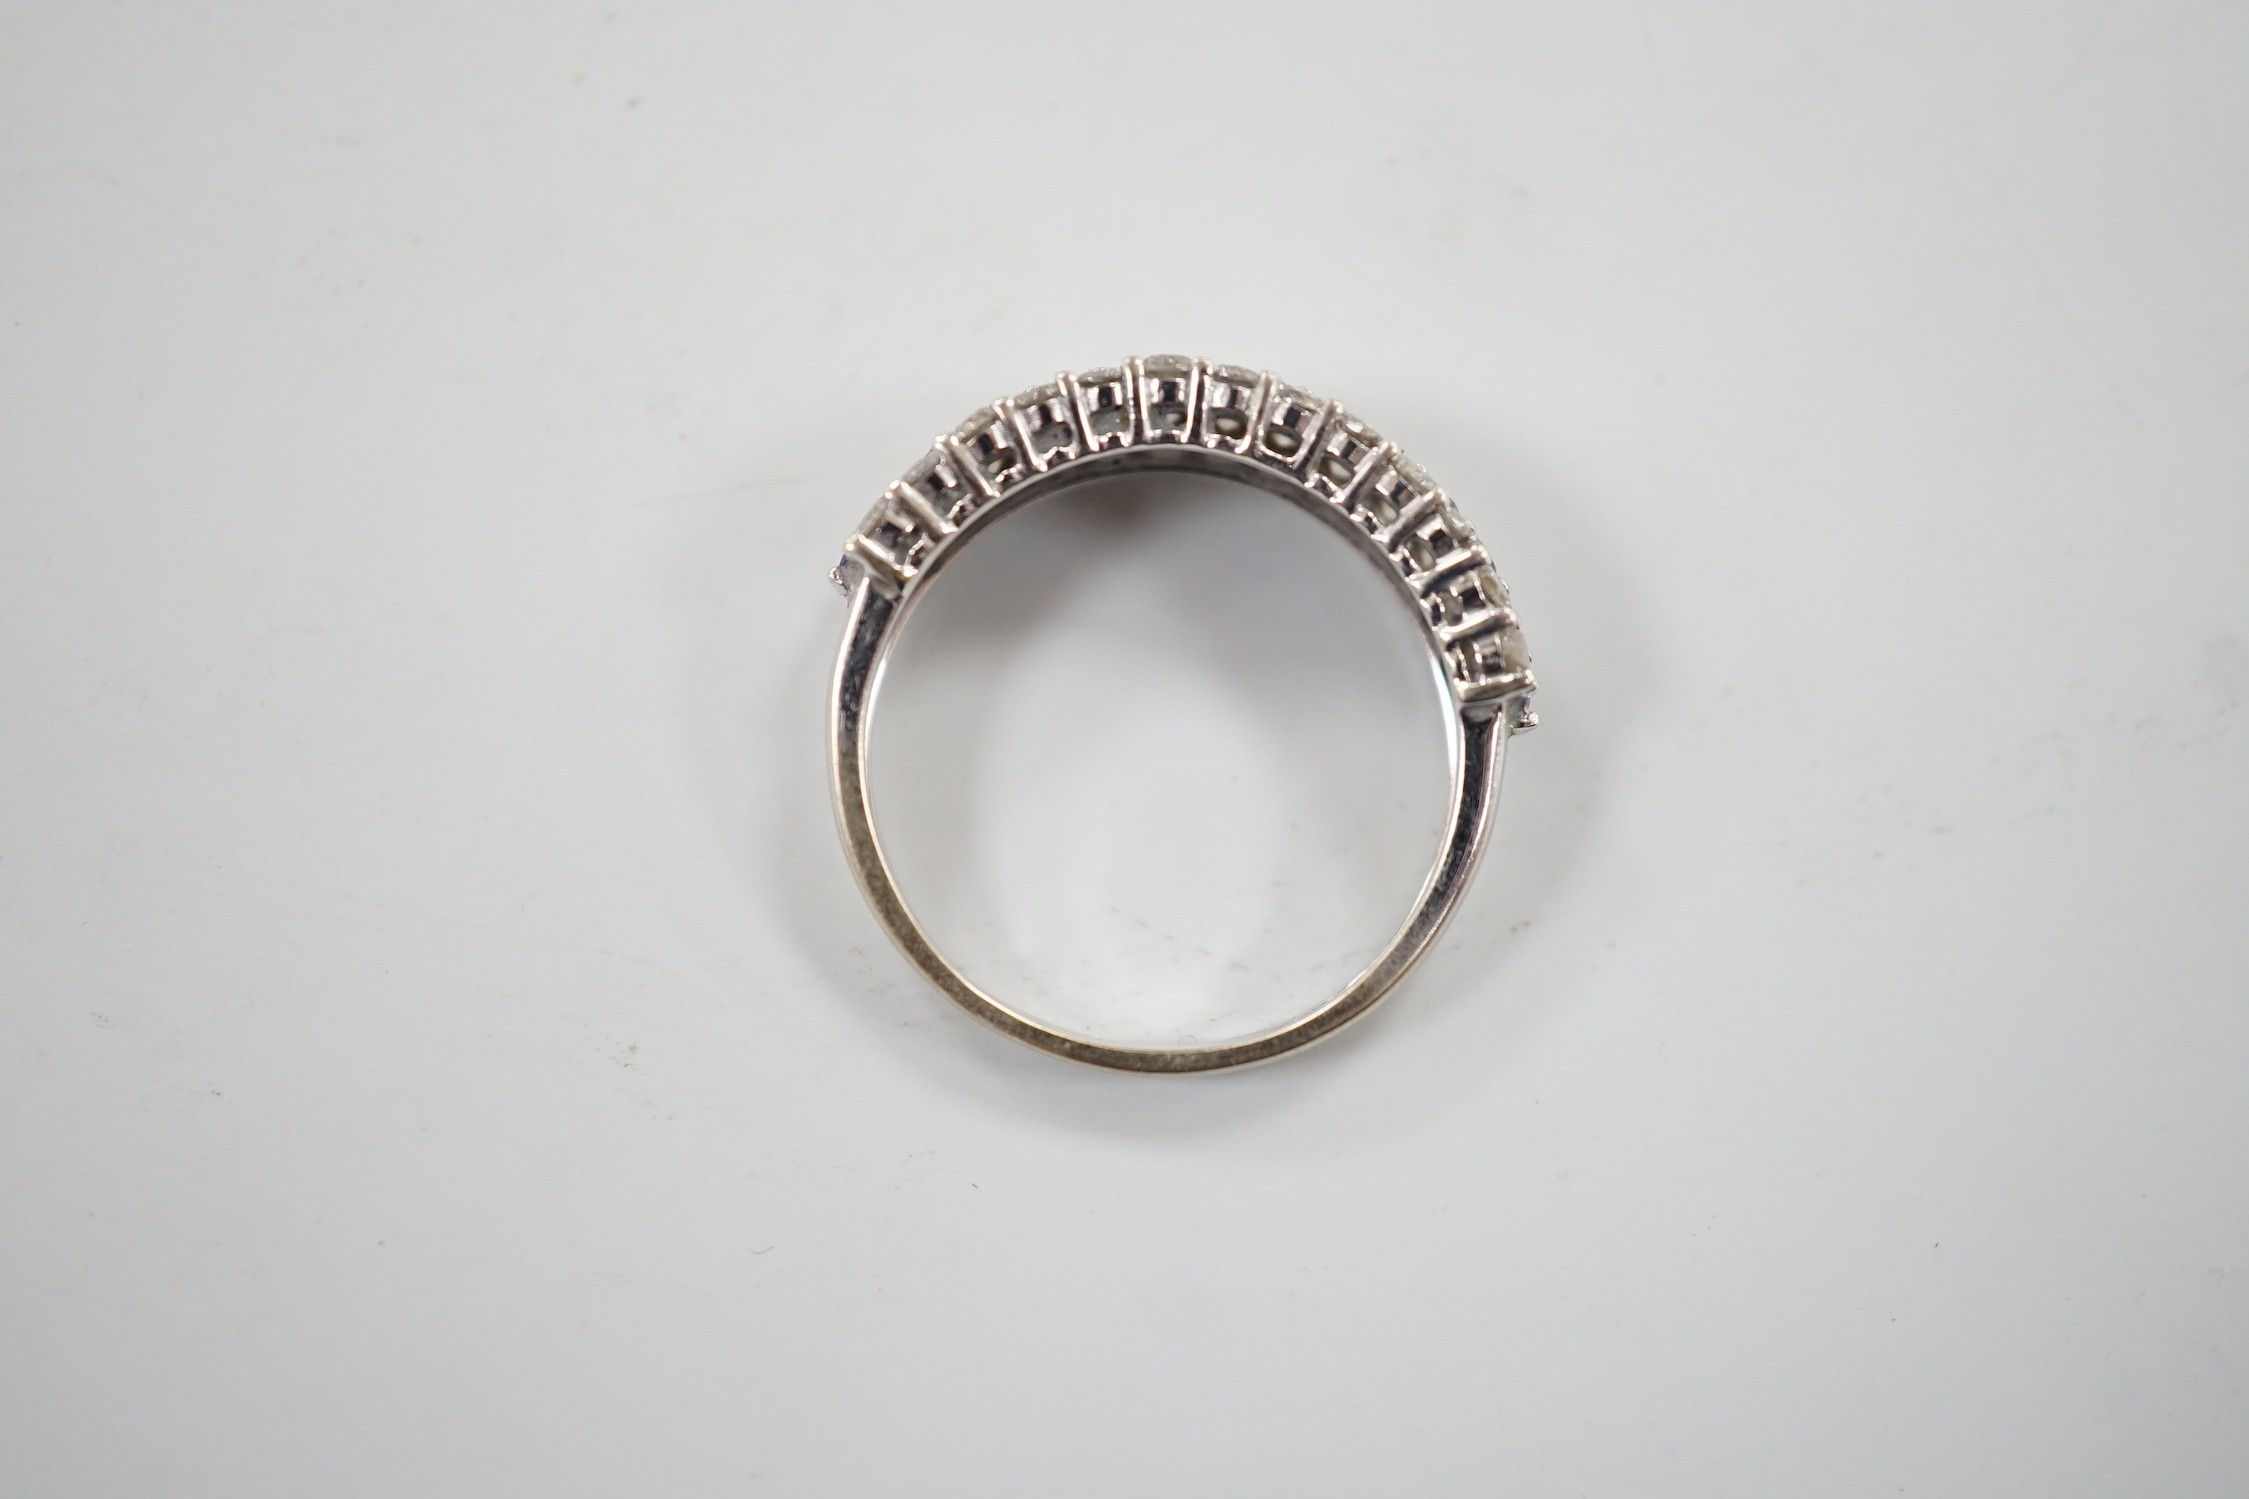 A modern 750 white metal, sapphire and diamond set three row half hoop ring, size M, gross weight 2.5 grams.